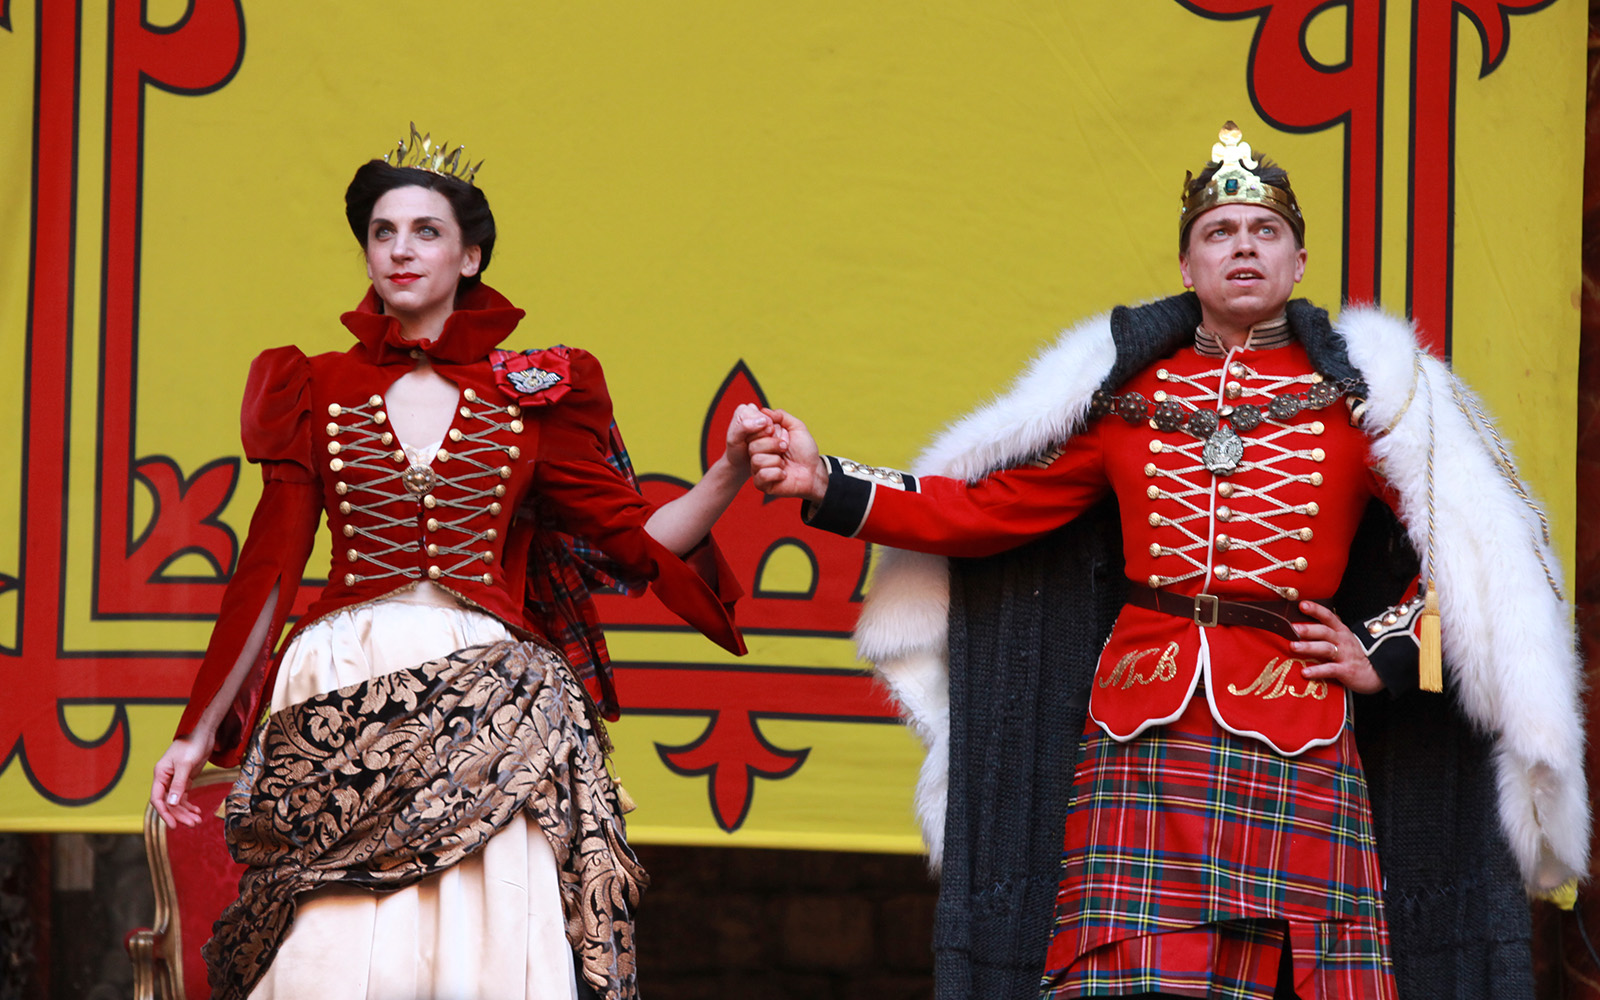 Macbeth and Lady Macbeth dressed in royal garments hold hands